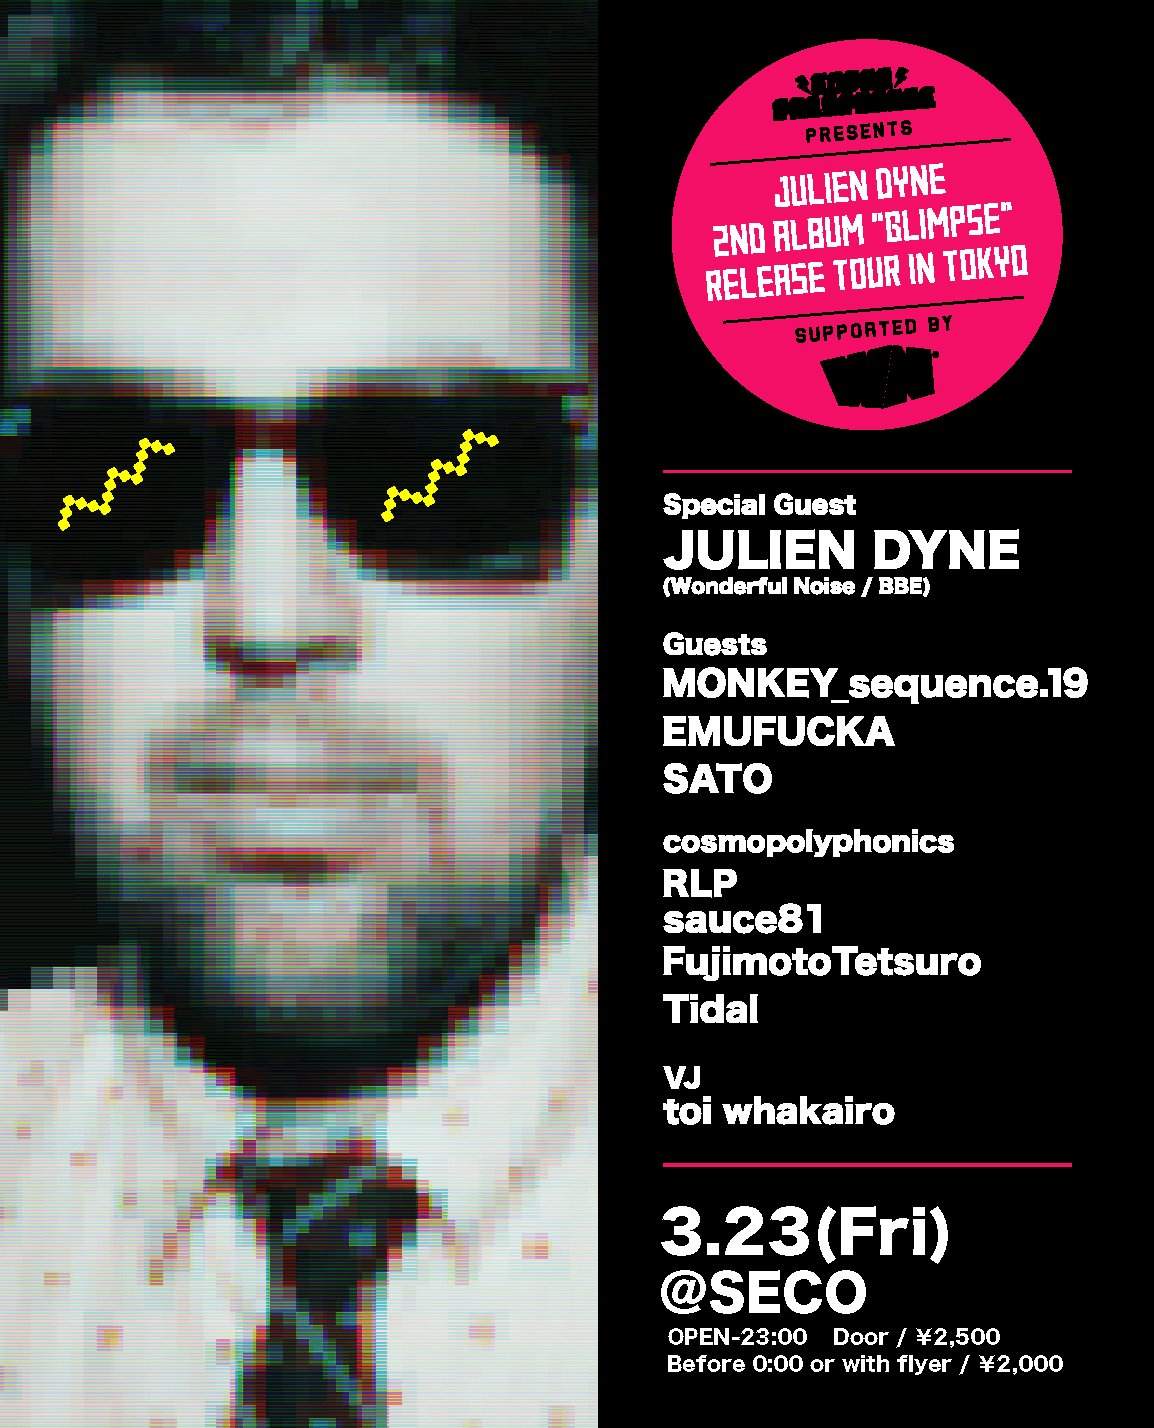 Cosmopolyphonic presents Julien Dyne 2nd Album glimpse Release Tour - フライヤー表